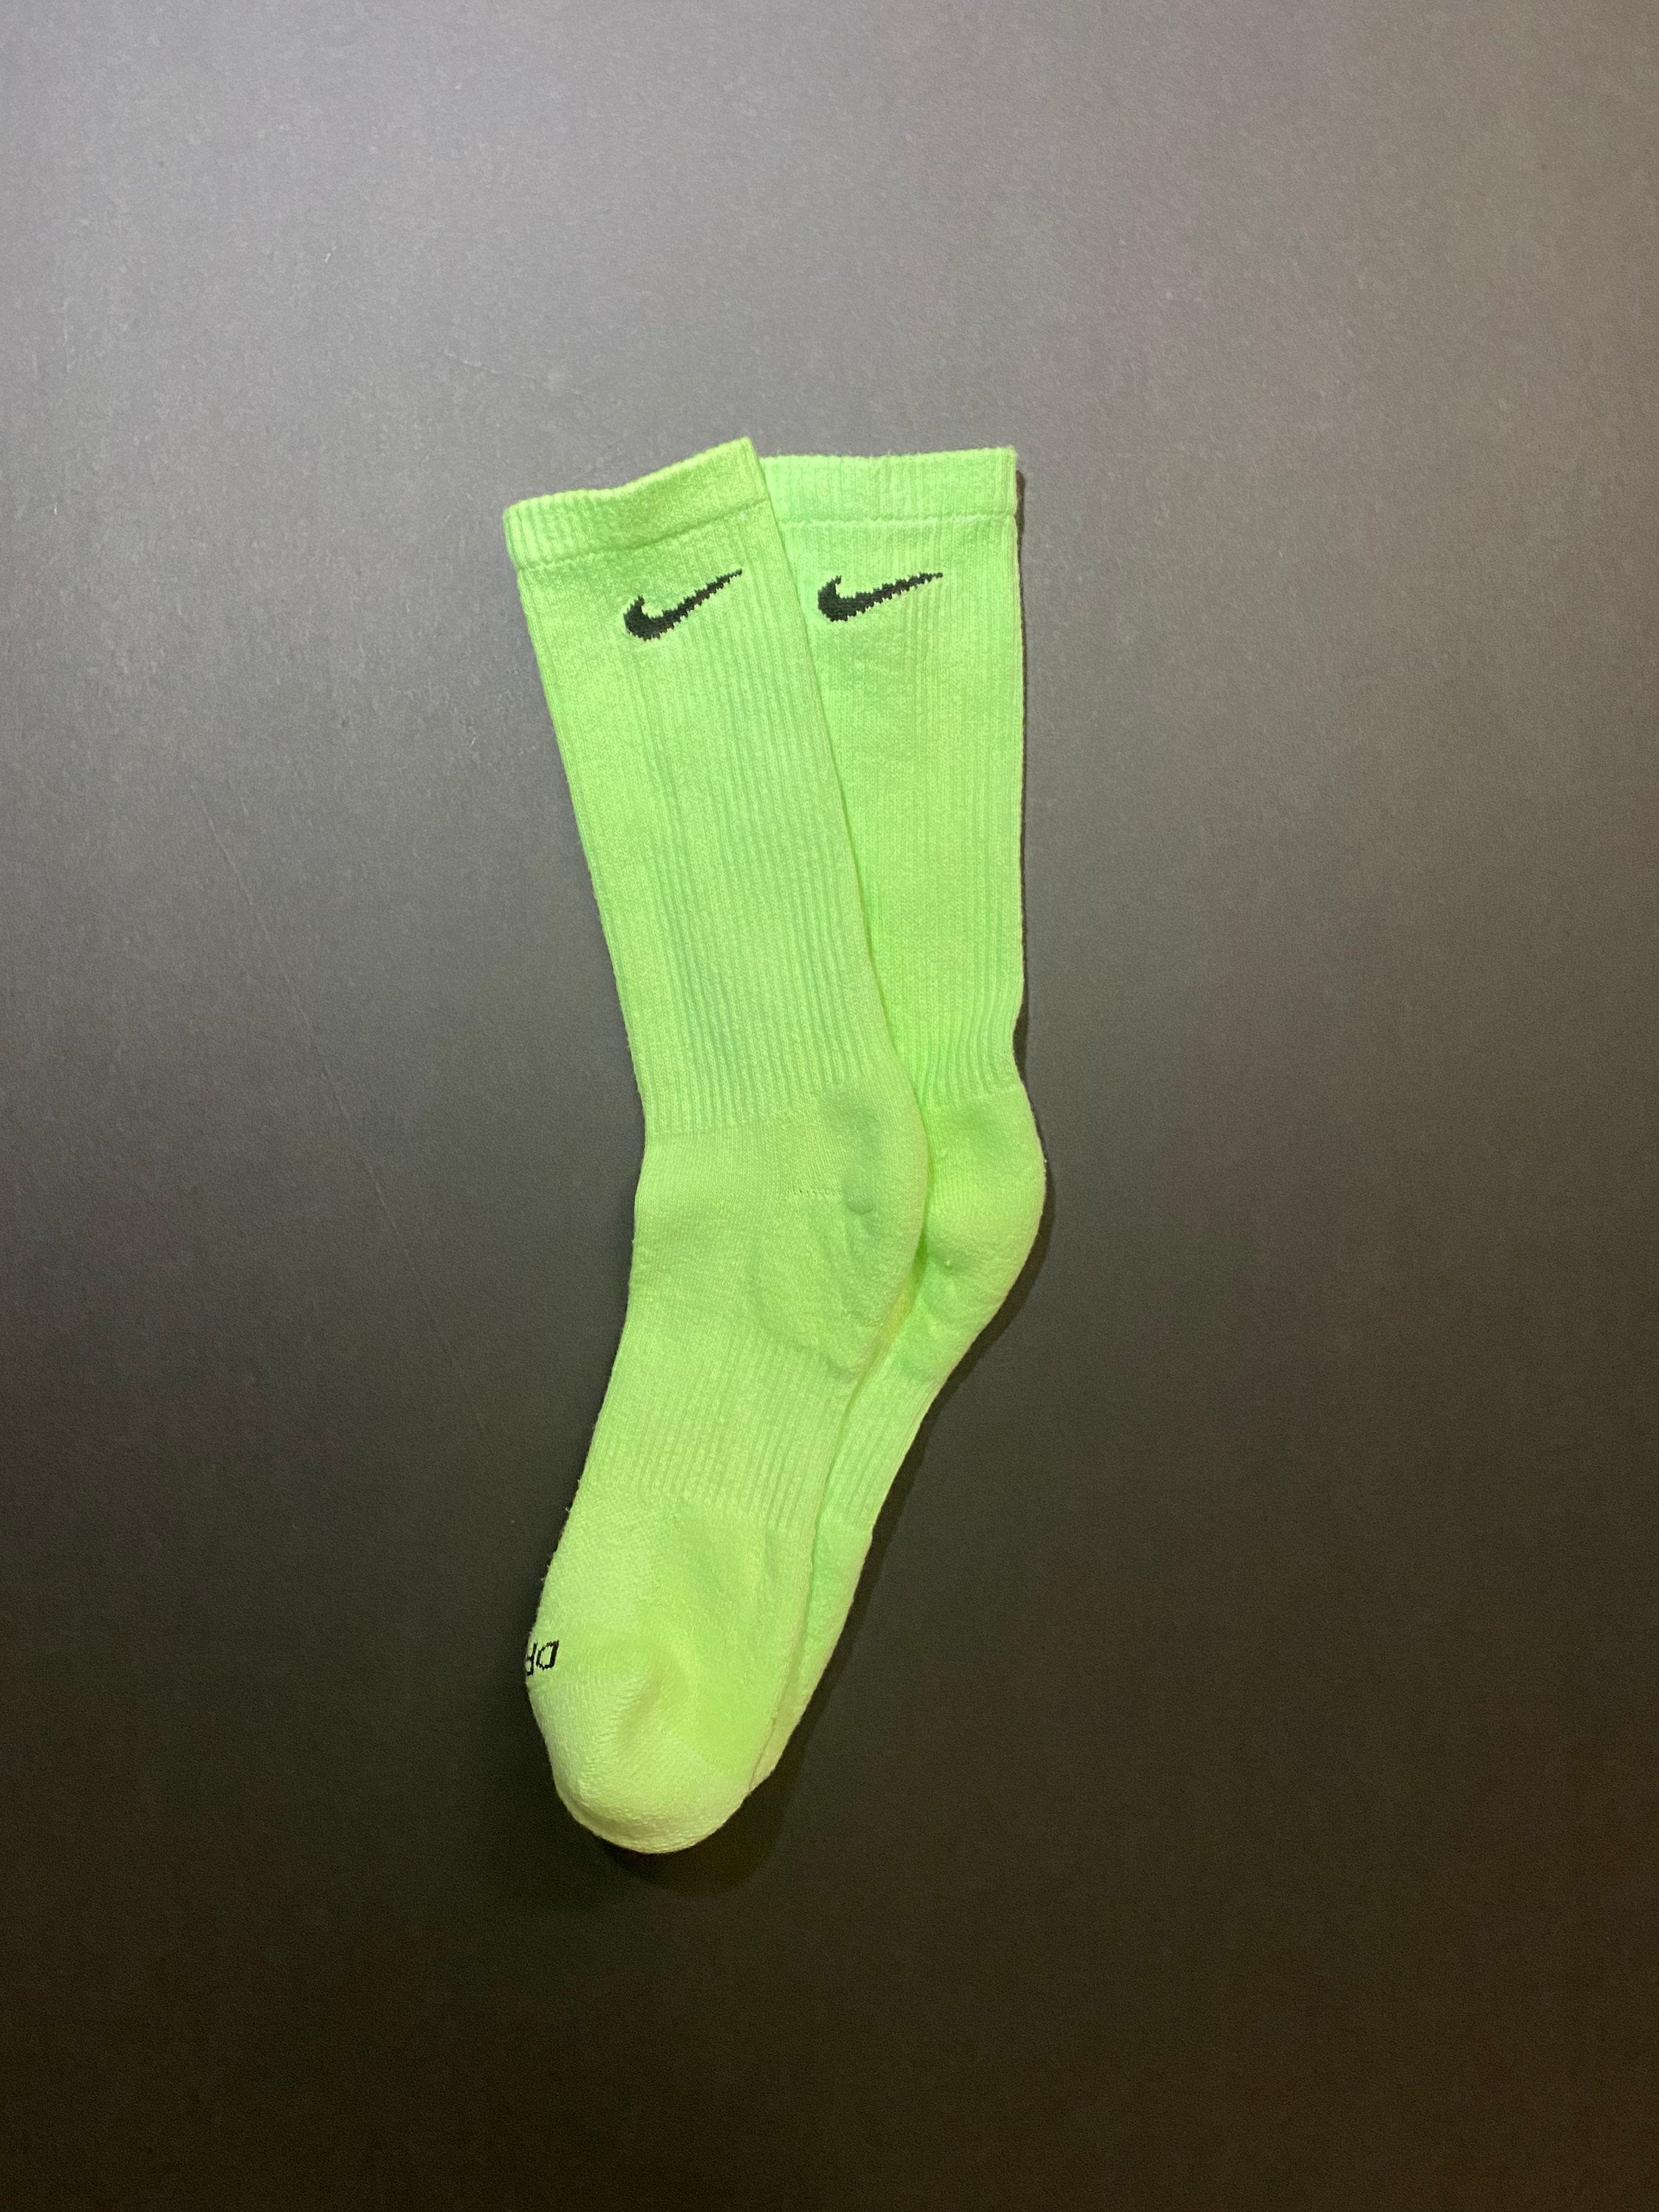 NEON Nike Crew Tie Dye Socks Ready to 